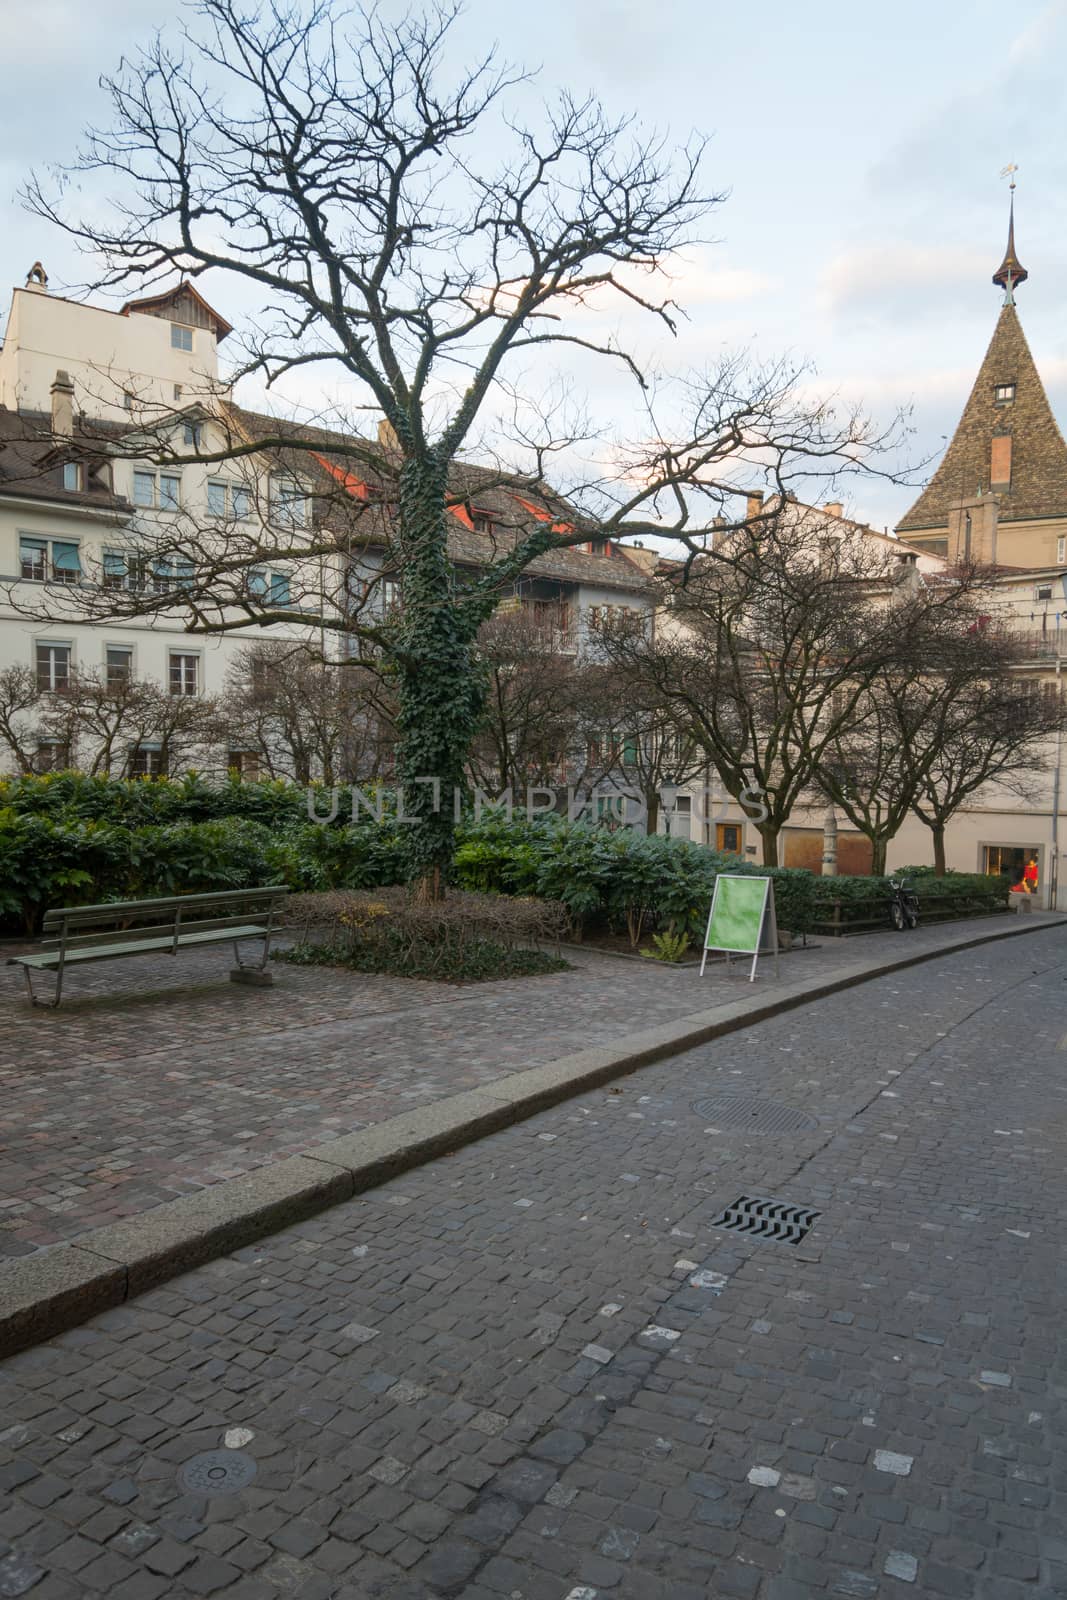 Street scene in the Old Town (Altstadt), in Zurich, Switzerland